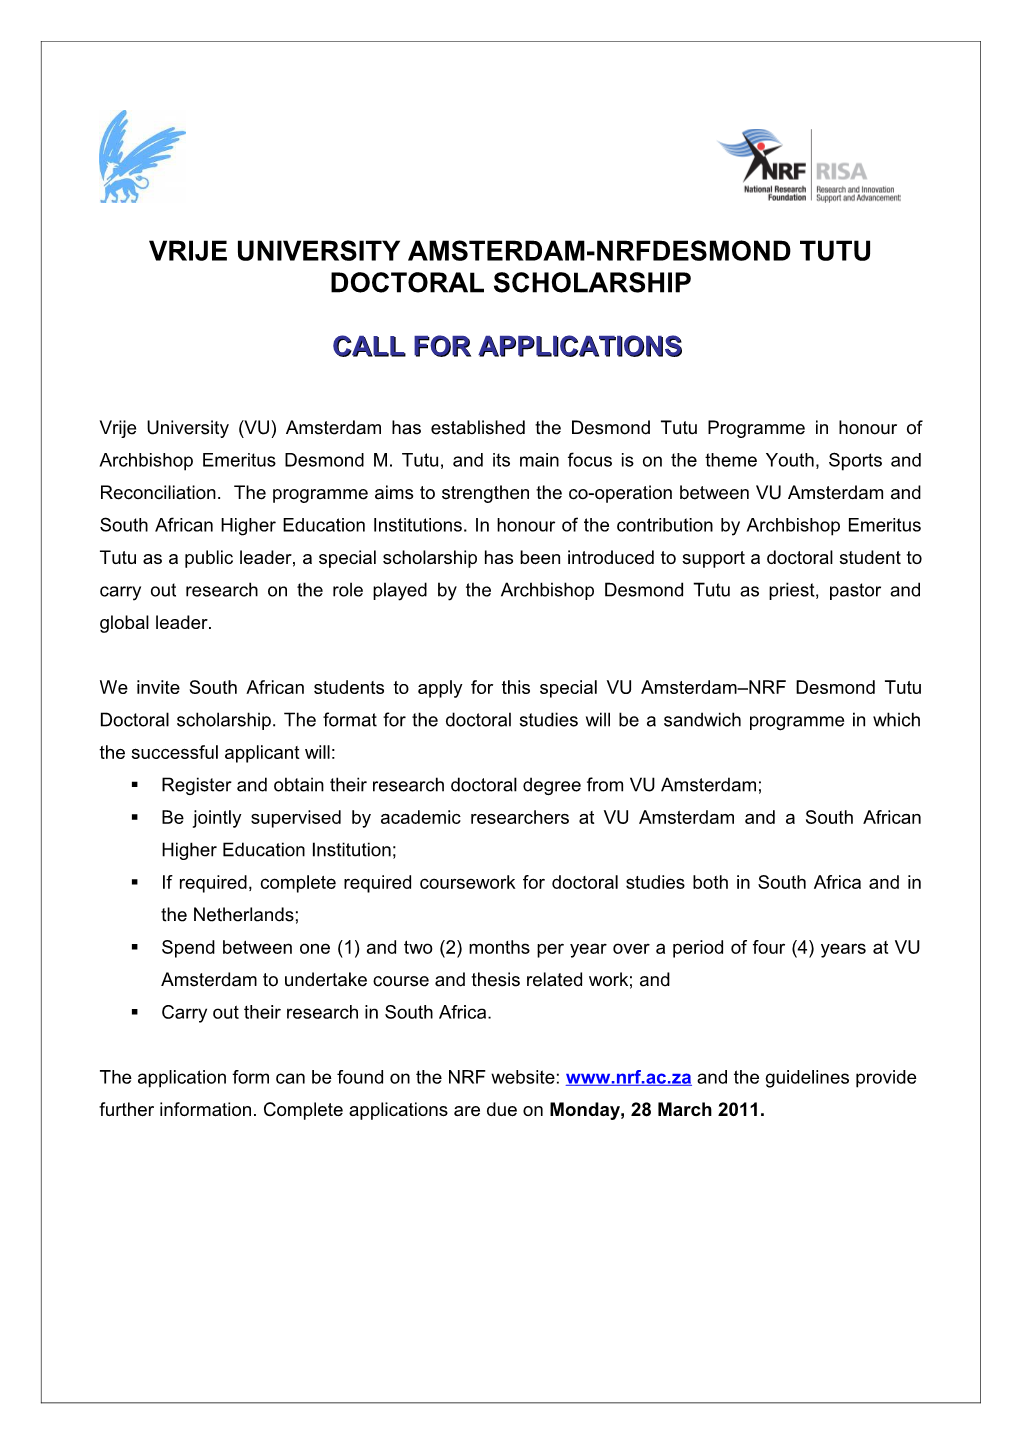 Vrije University Amsterdam-Nrfdesmond Tutudoctoralscholarship